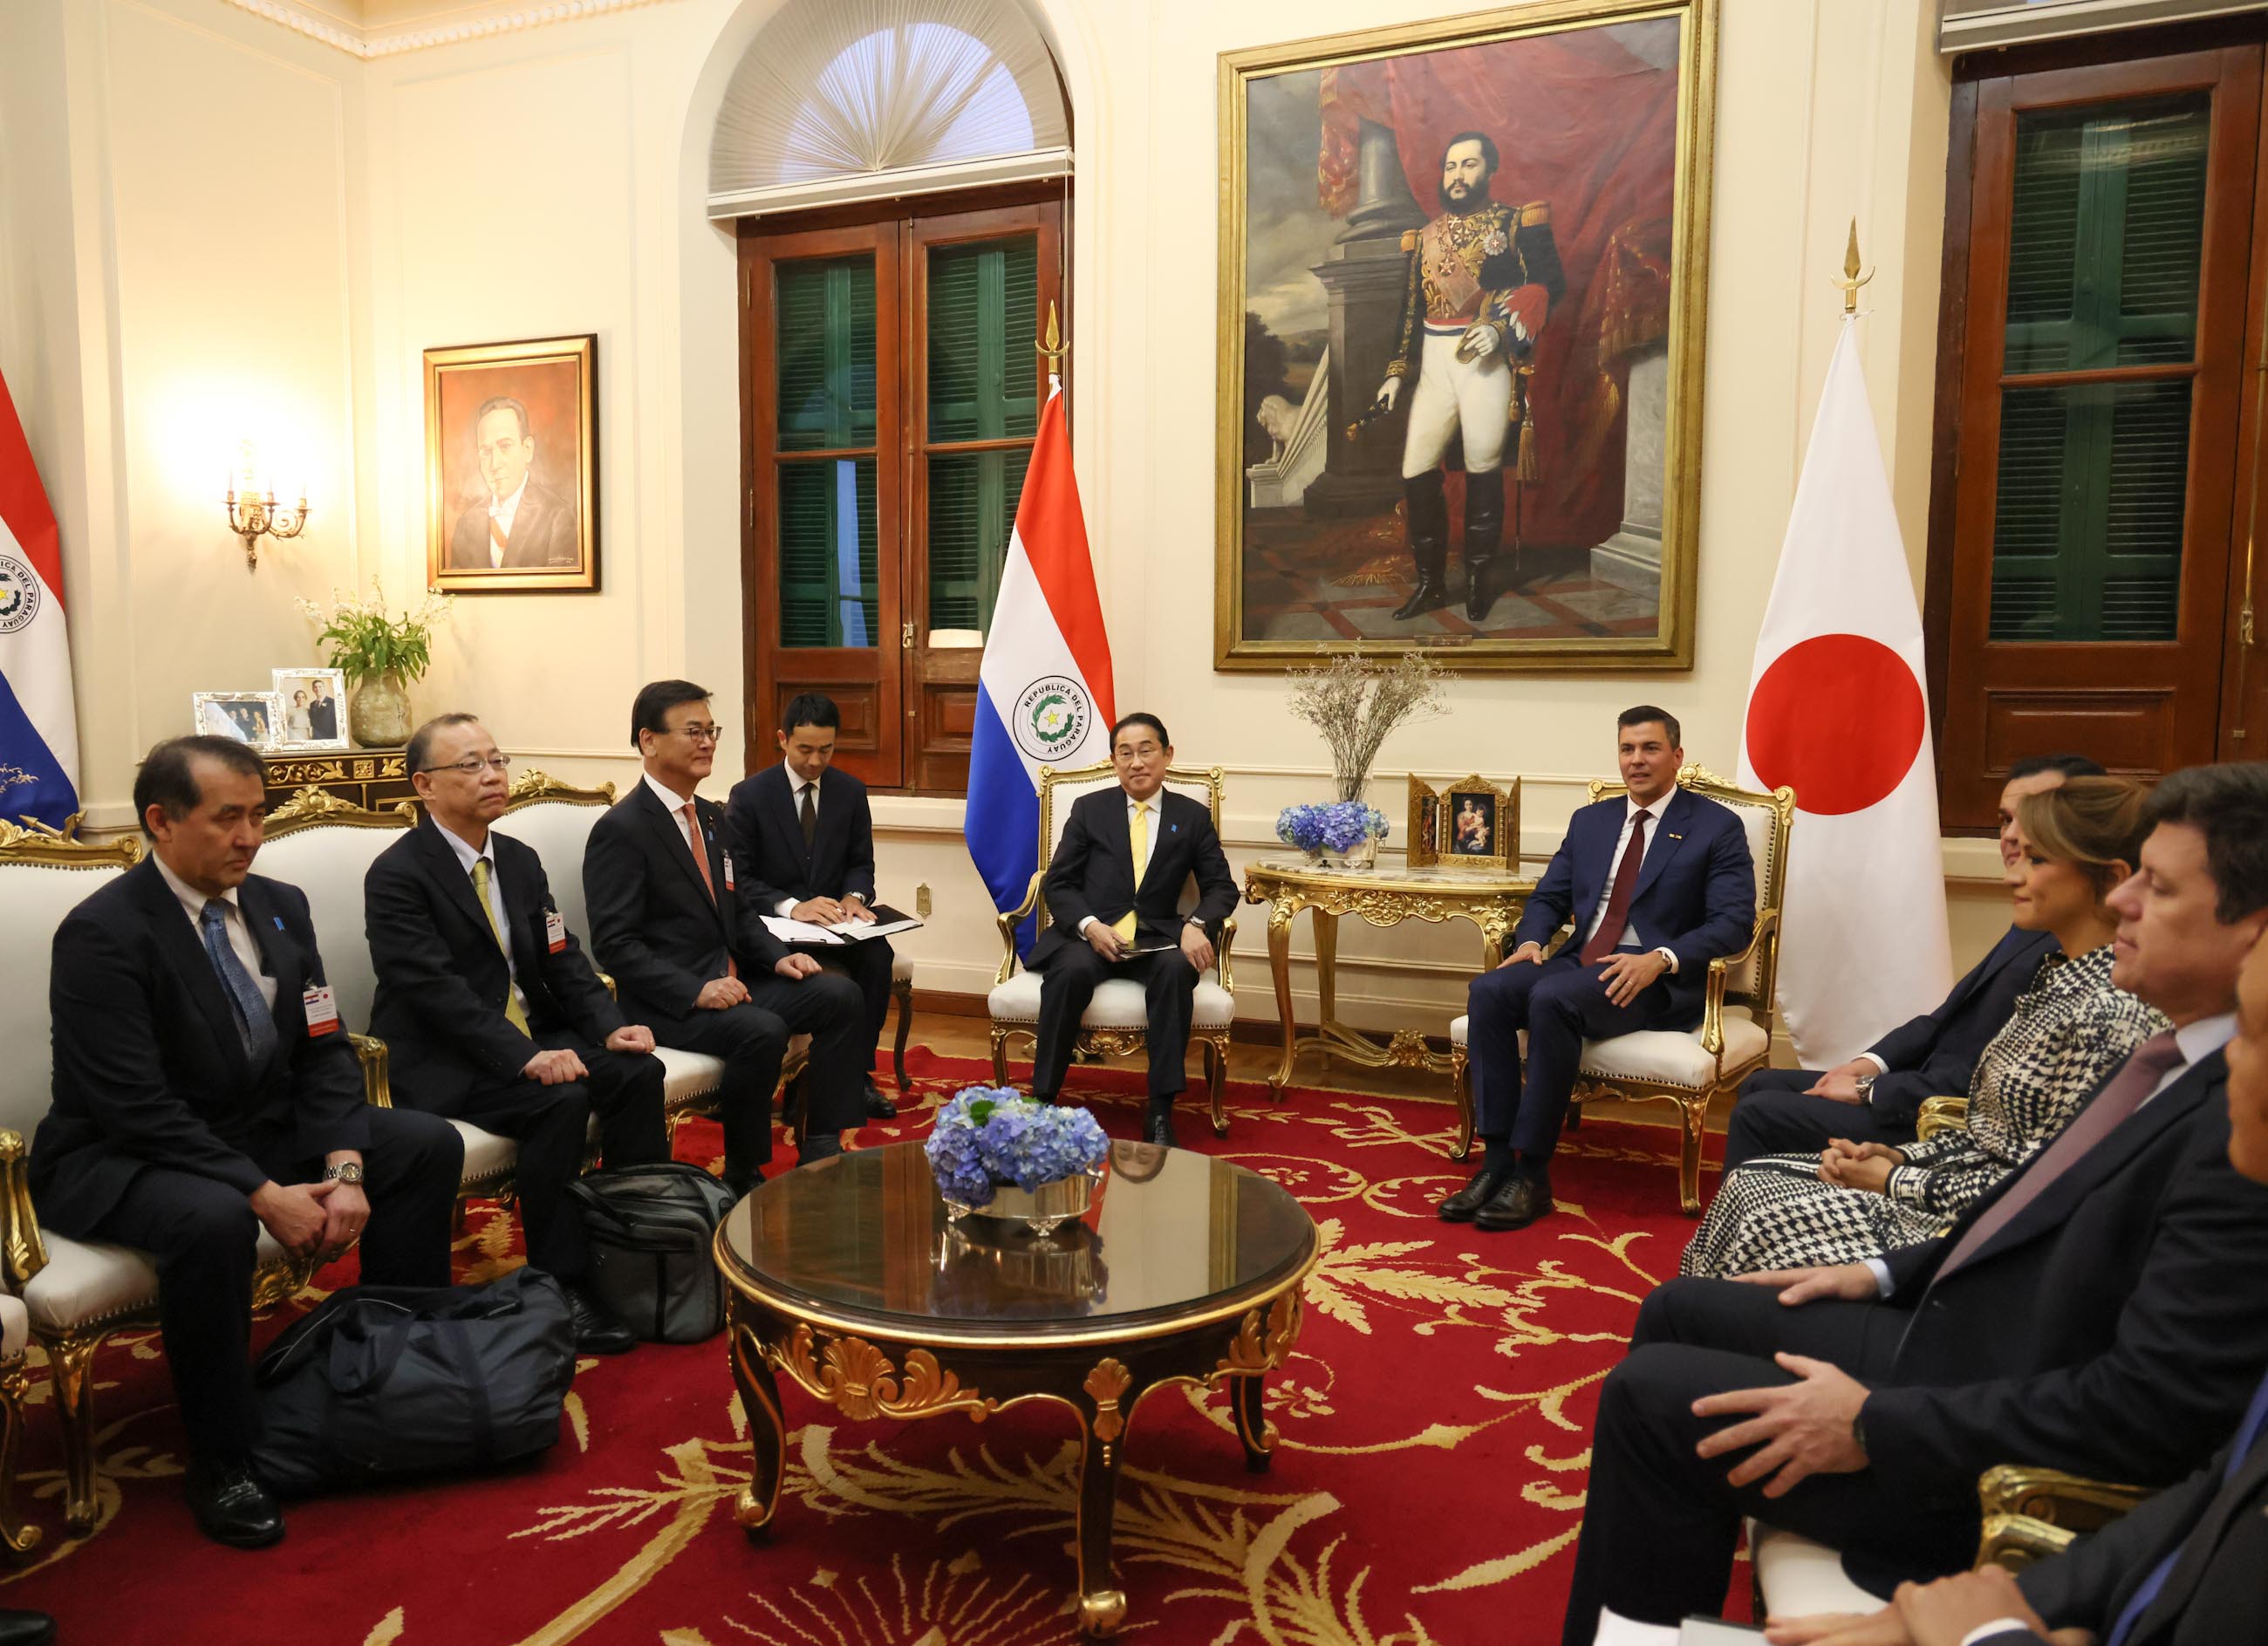 Japan-Paraguay Summit Meeting (small group meeting) (2)